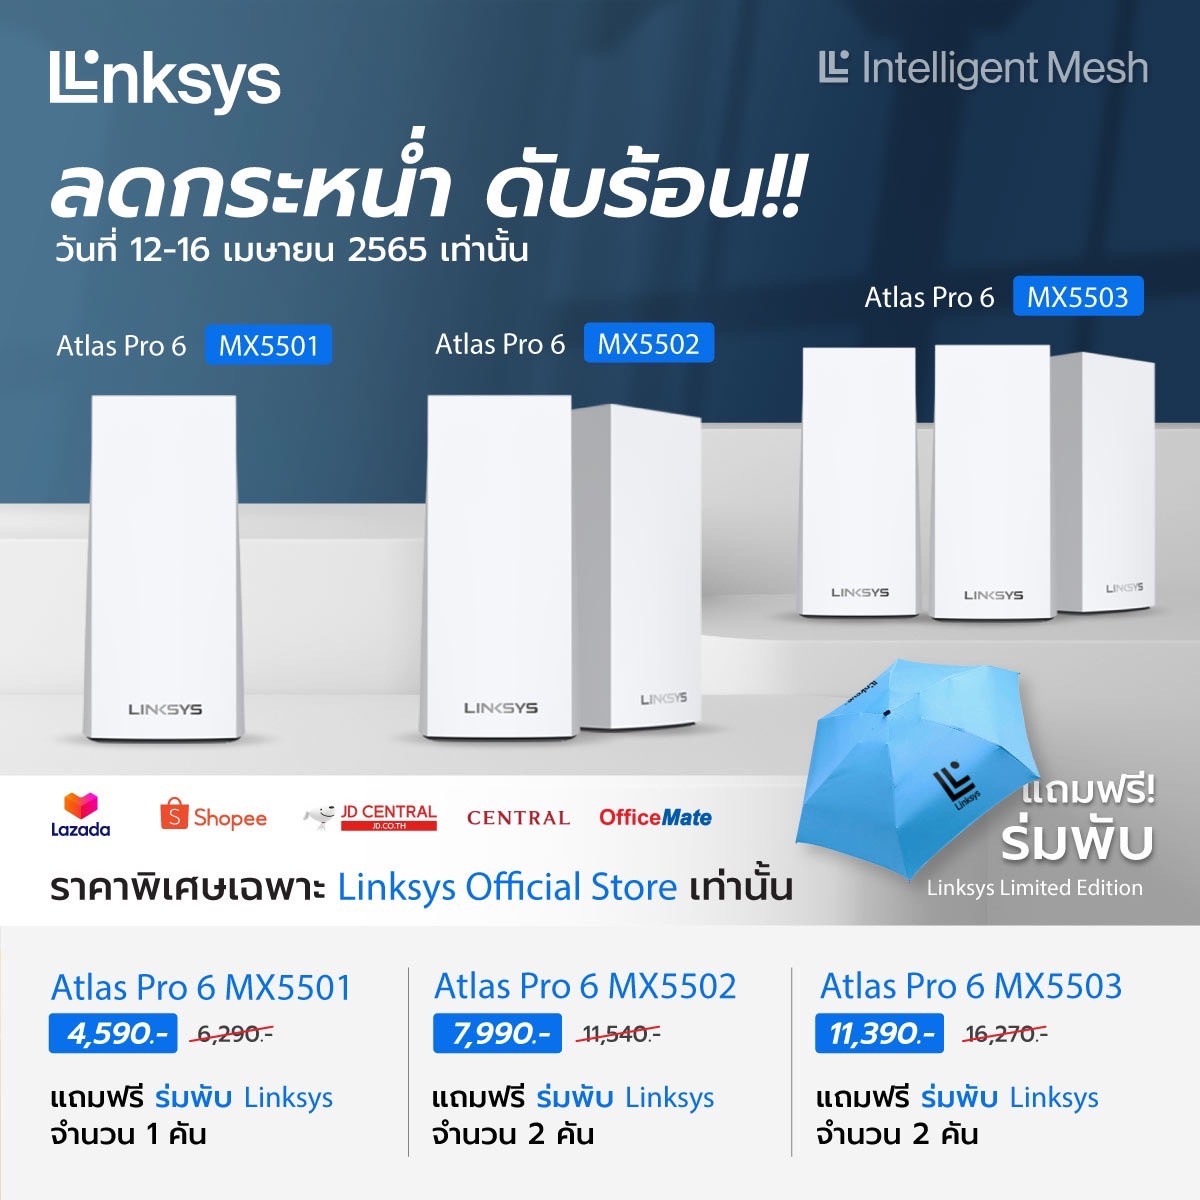 Linksys จัดเต็มโปรโมชั่นรับซัมเมอร์กับแคมเปญ Linksys Summer Sale ลดกระหน่ำในราคาสุดหนาว เอาใจคอเราเตอร์กับรุ่น Atlas Pro 6 พร้อมรับร่มสุดคูล Limited Edition